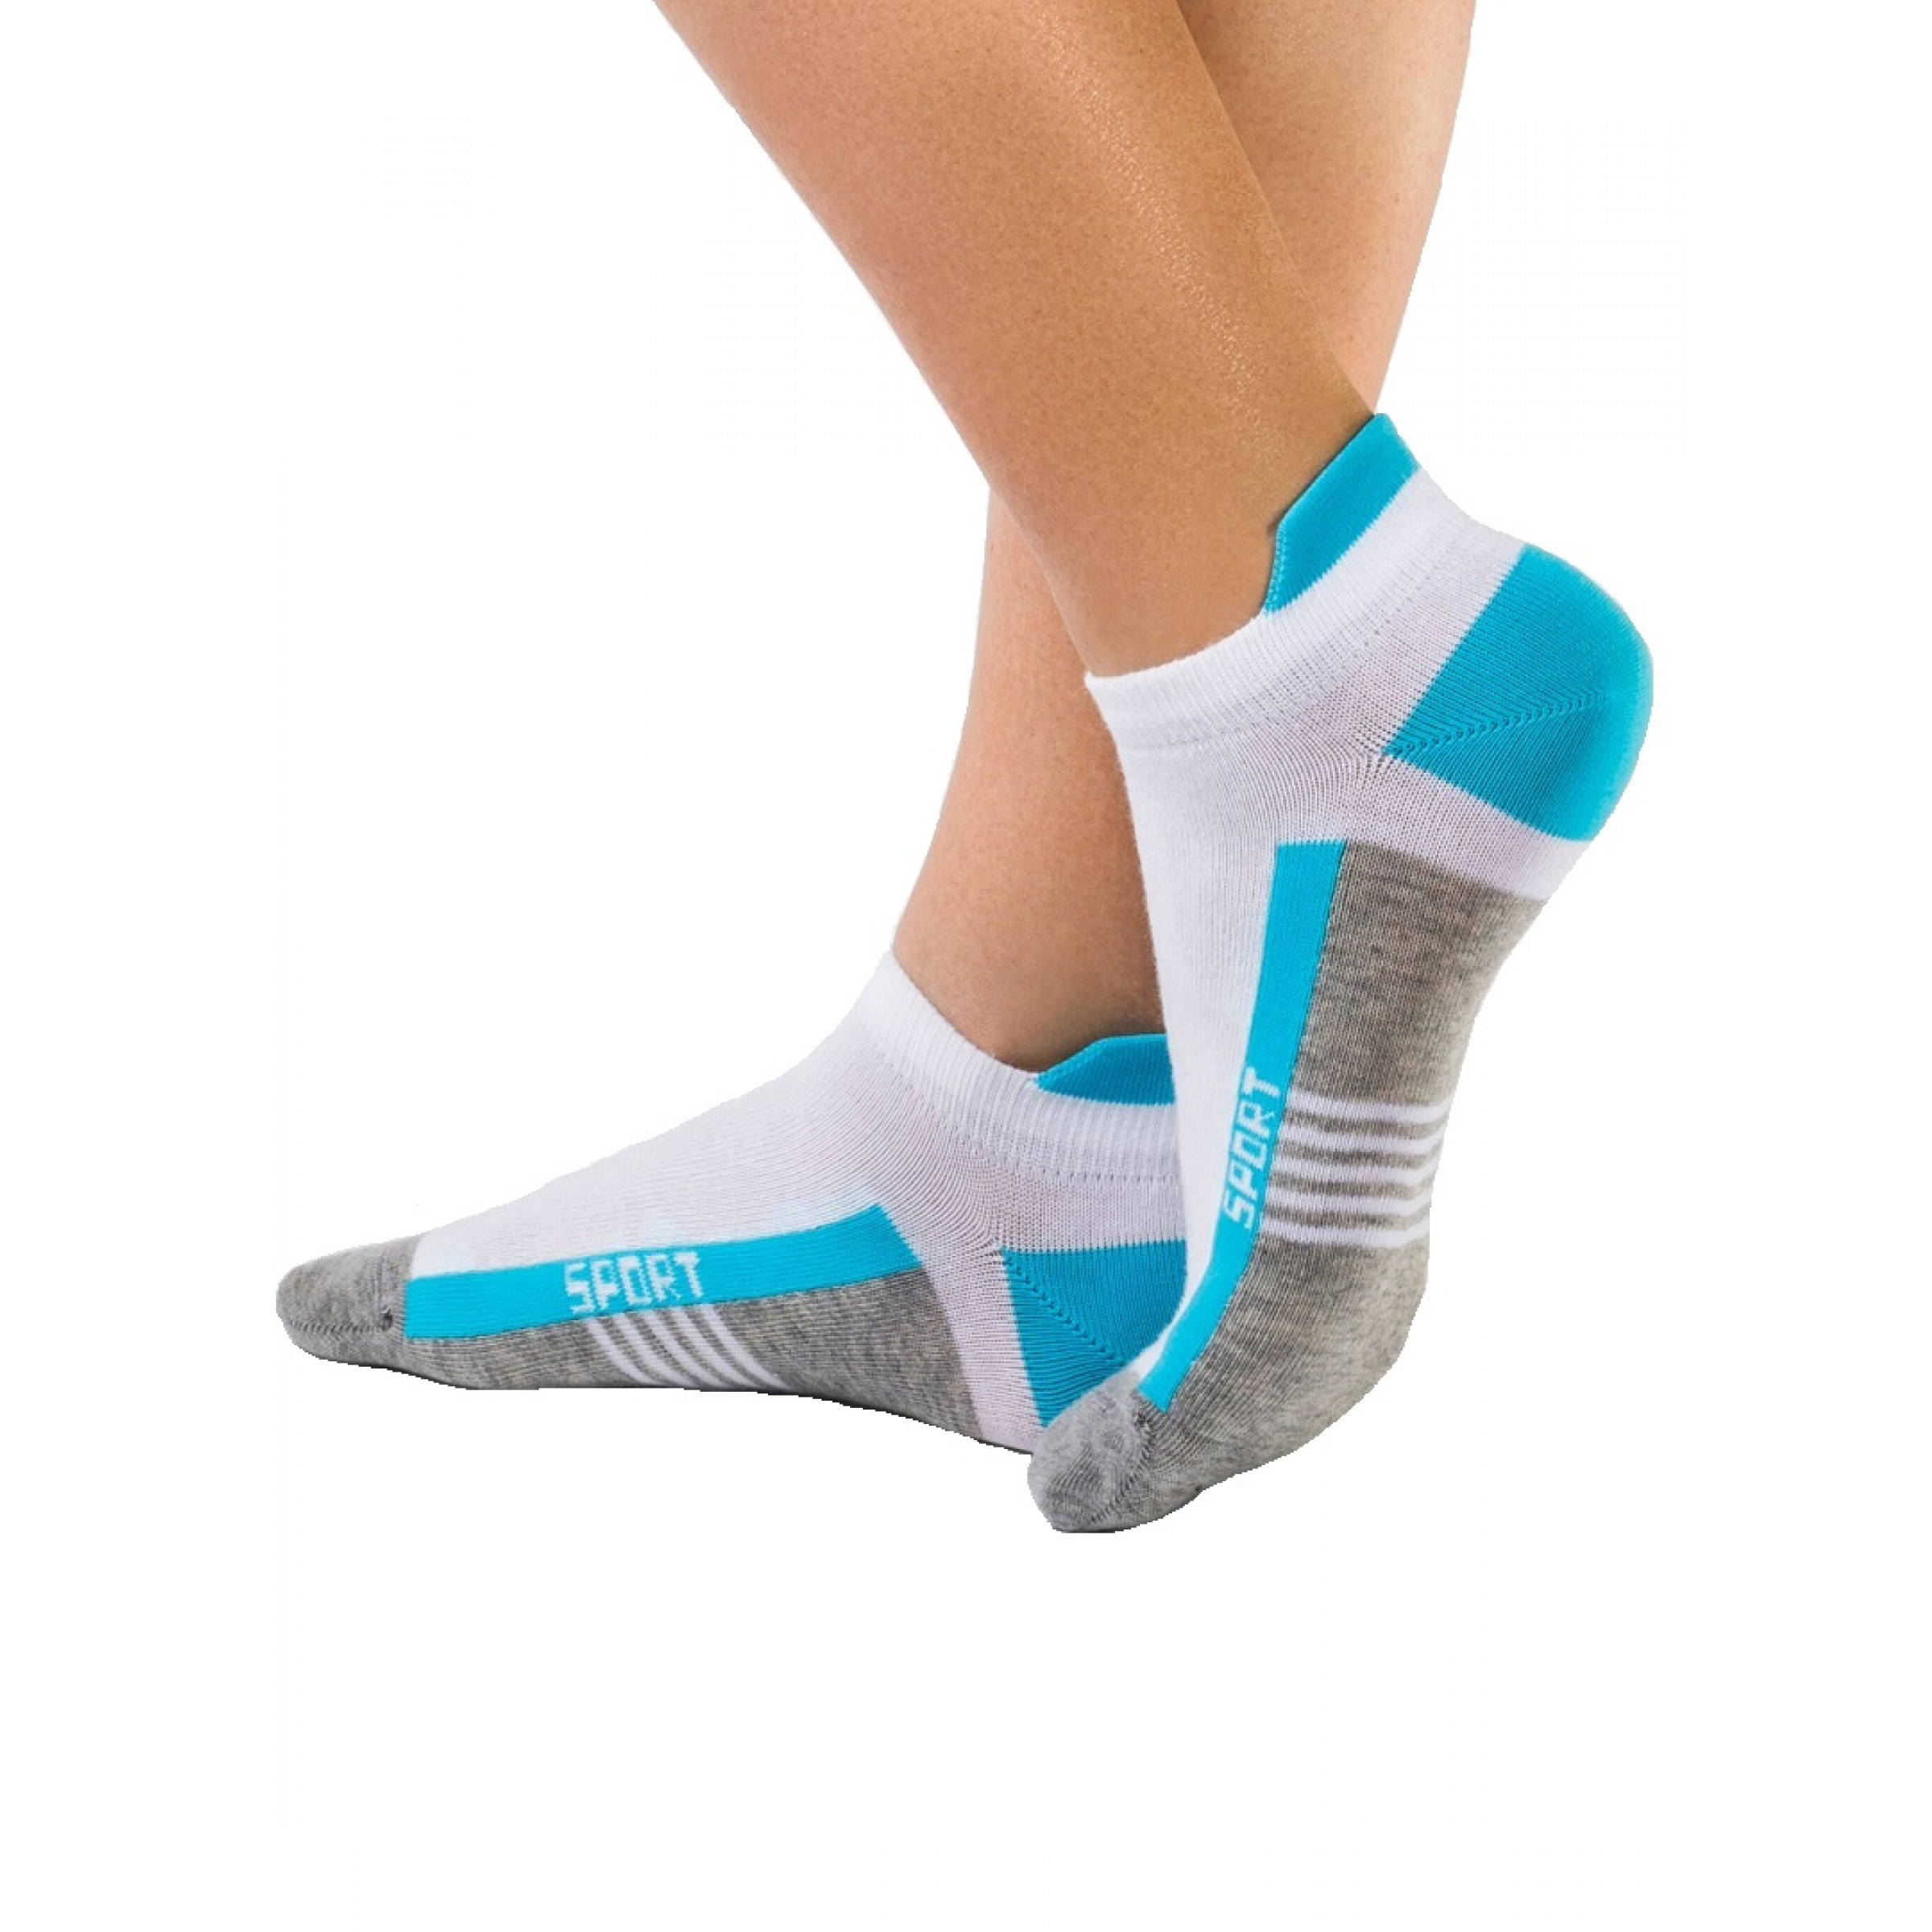 Женские носки Conte Active 35-37 размер серо-бирюзовый цвет